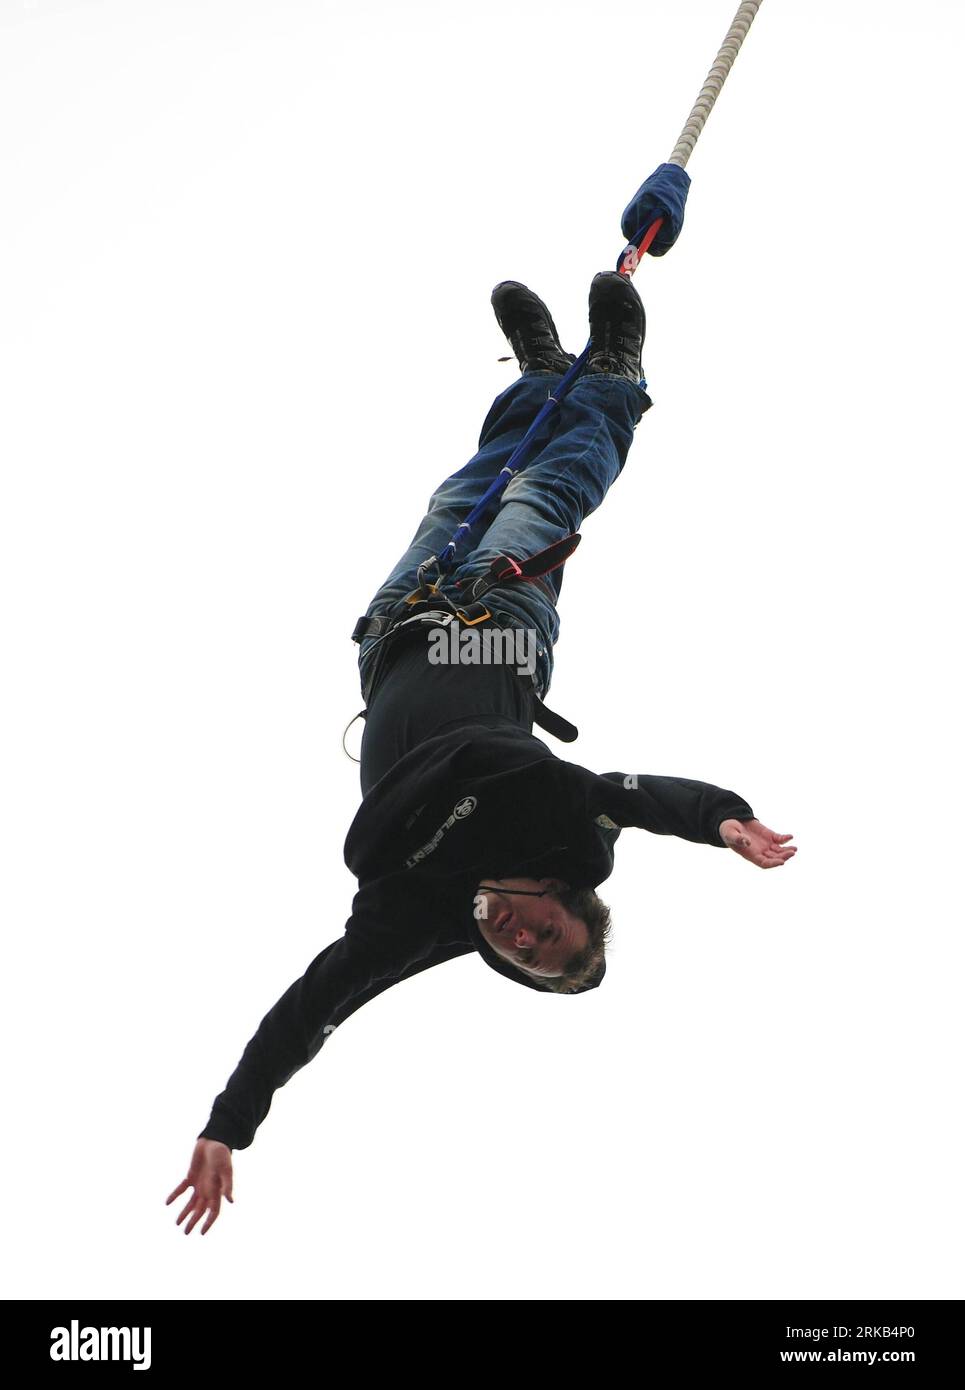 Bildnummer: 54467843  Datum: 26.09.2010  Copyright: imago/Xinhua (100926) -- LONDON, Sept. 26, 2010 (Xinhua) -- James Field bungee jumps during his attempt of setting a new Guinness World Record in London, Britain, Sept. 26, 2010. Field bungee jumped 42 times from over 160 feets (around 55 metres) in one hour, breaking the previous record of 19 times.(Xinhua/Zeng Yi) (zw) BRITAIN-LONDON-BUNGEE JUMP-GUINNESS WORLD RECORD PUBLICATIONxNOTxINxCHN Gesellschaft kbdig xkg 2010 hoch o0 Bungeespringen, Weltrekord, Rekordversuch, Bungeespringer, Bungeejumper,    Bildnummer 54467843 Date 26 09 2010 Copyr Stock Photo